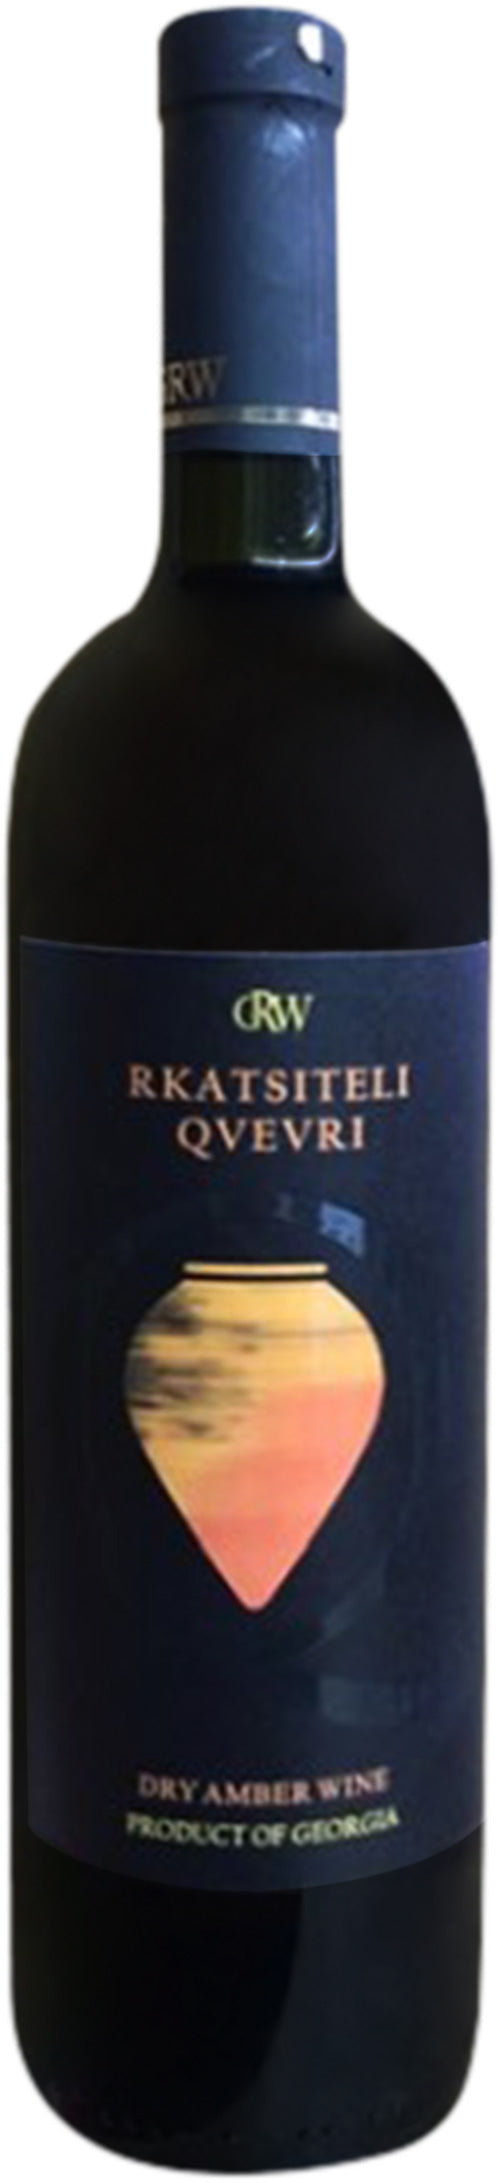 Kisi Qvevri Dry Amber Wine